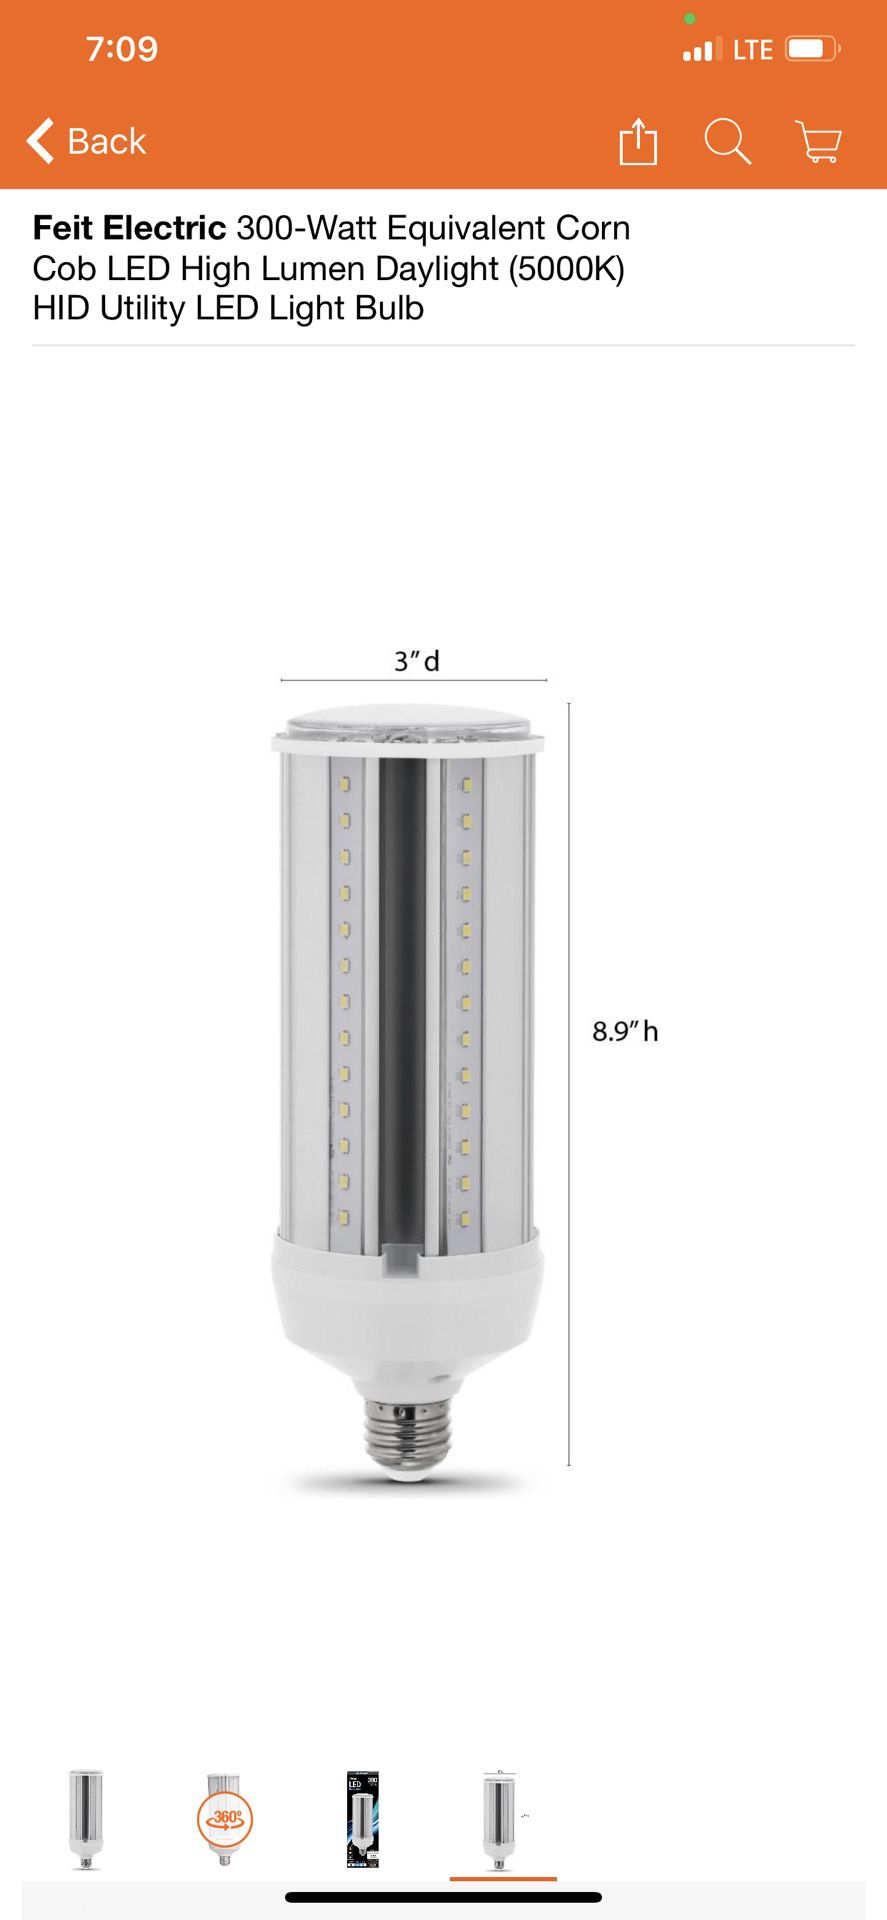 Feit Electric 300-Watt Equivalent Corn Cob LED High Lumen Daylight (5000K) HID Utility LED Light Bulb